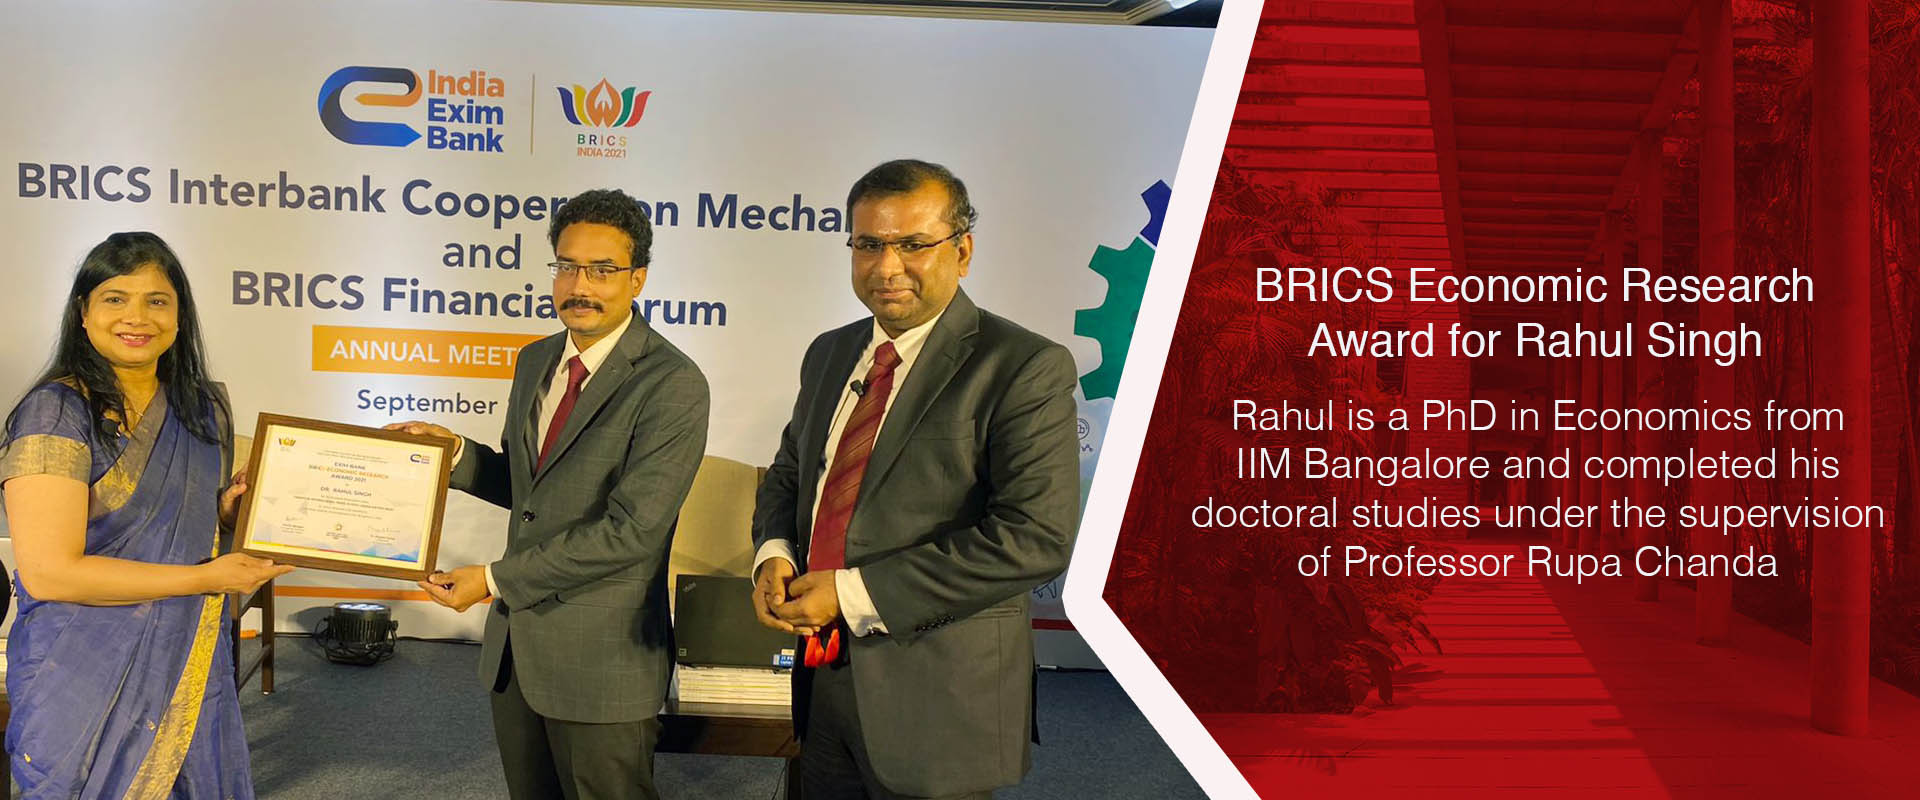 BRICS Economic Research Award for Rahul Singh 